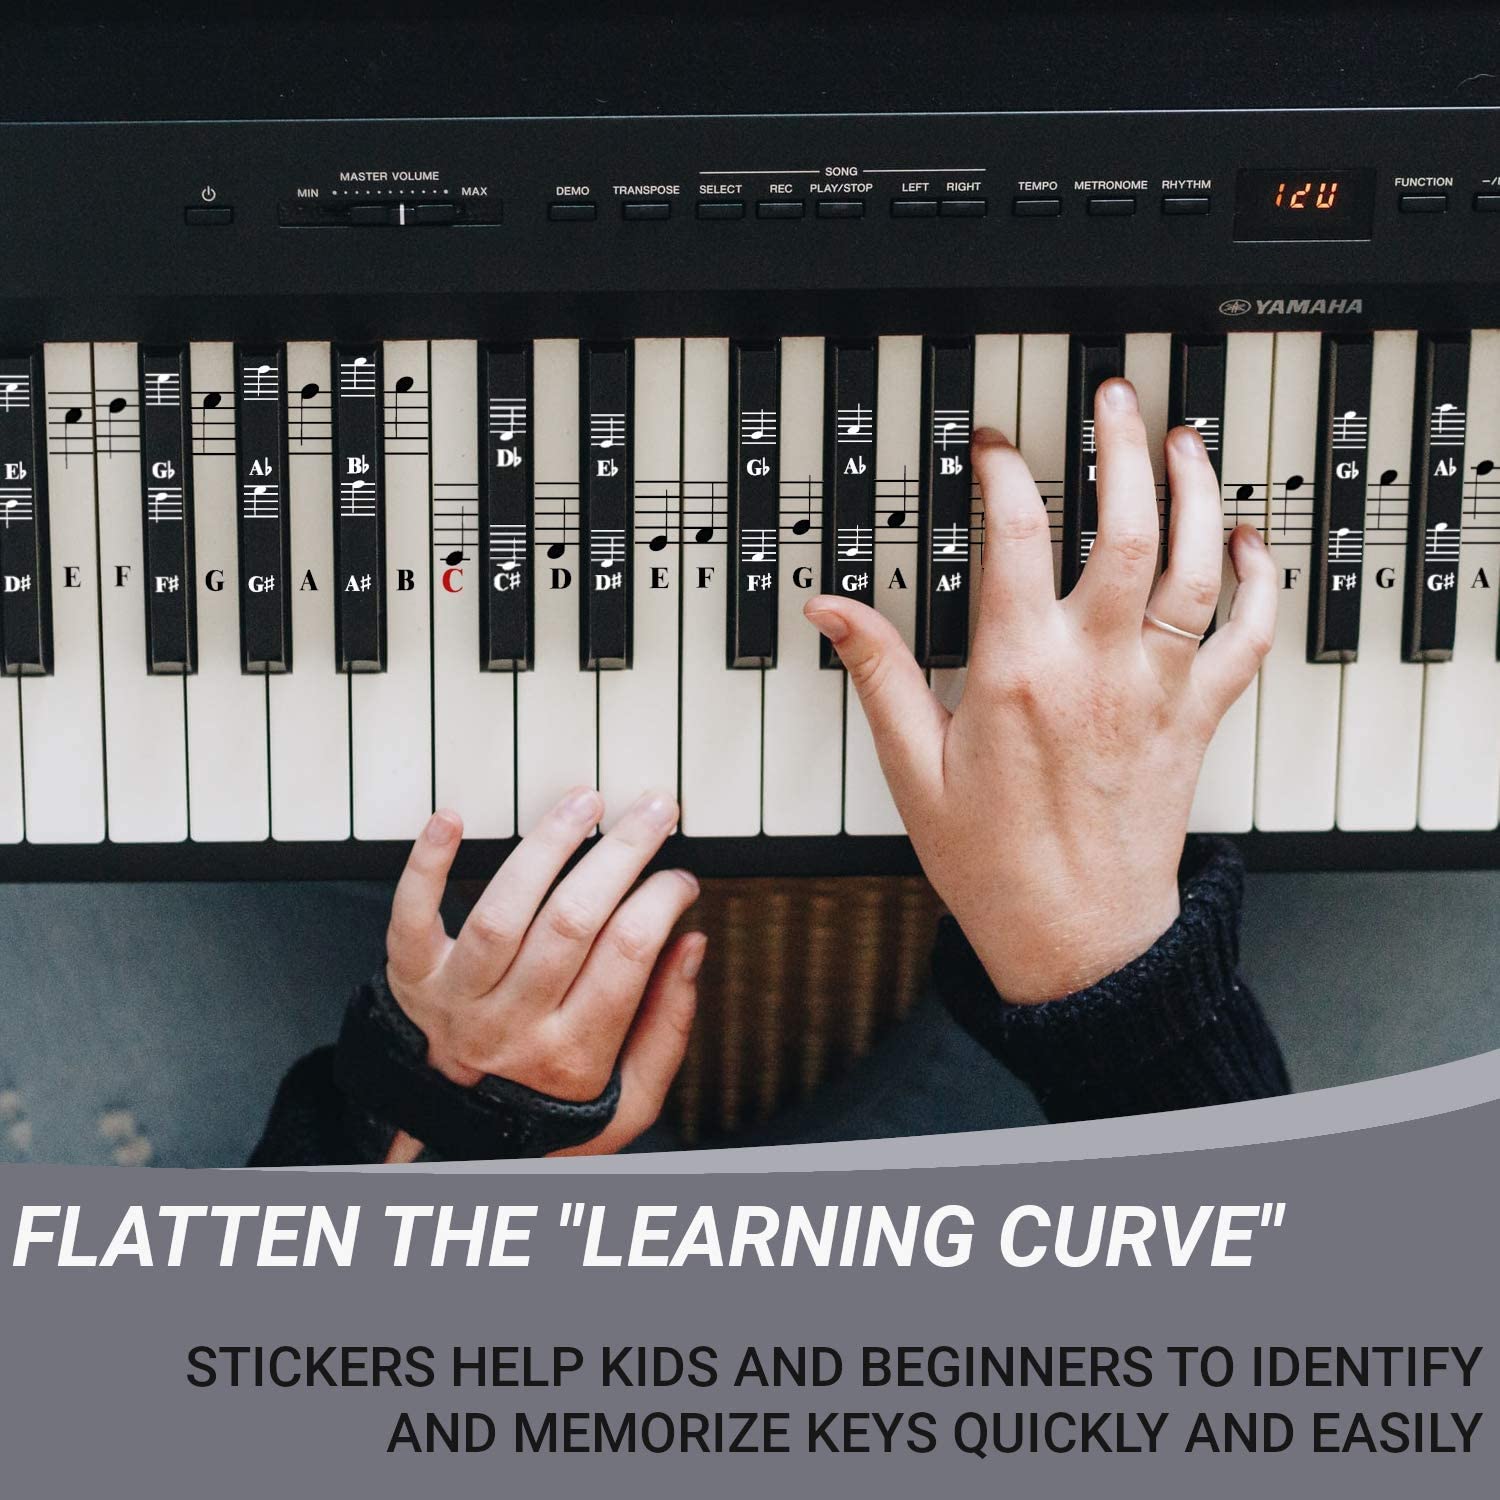 Piano keyboard sticker – healingvoicesplay&learn